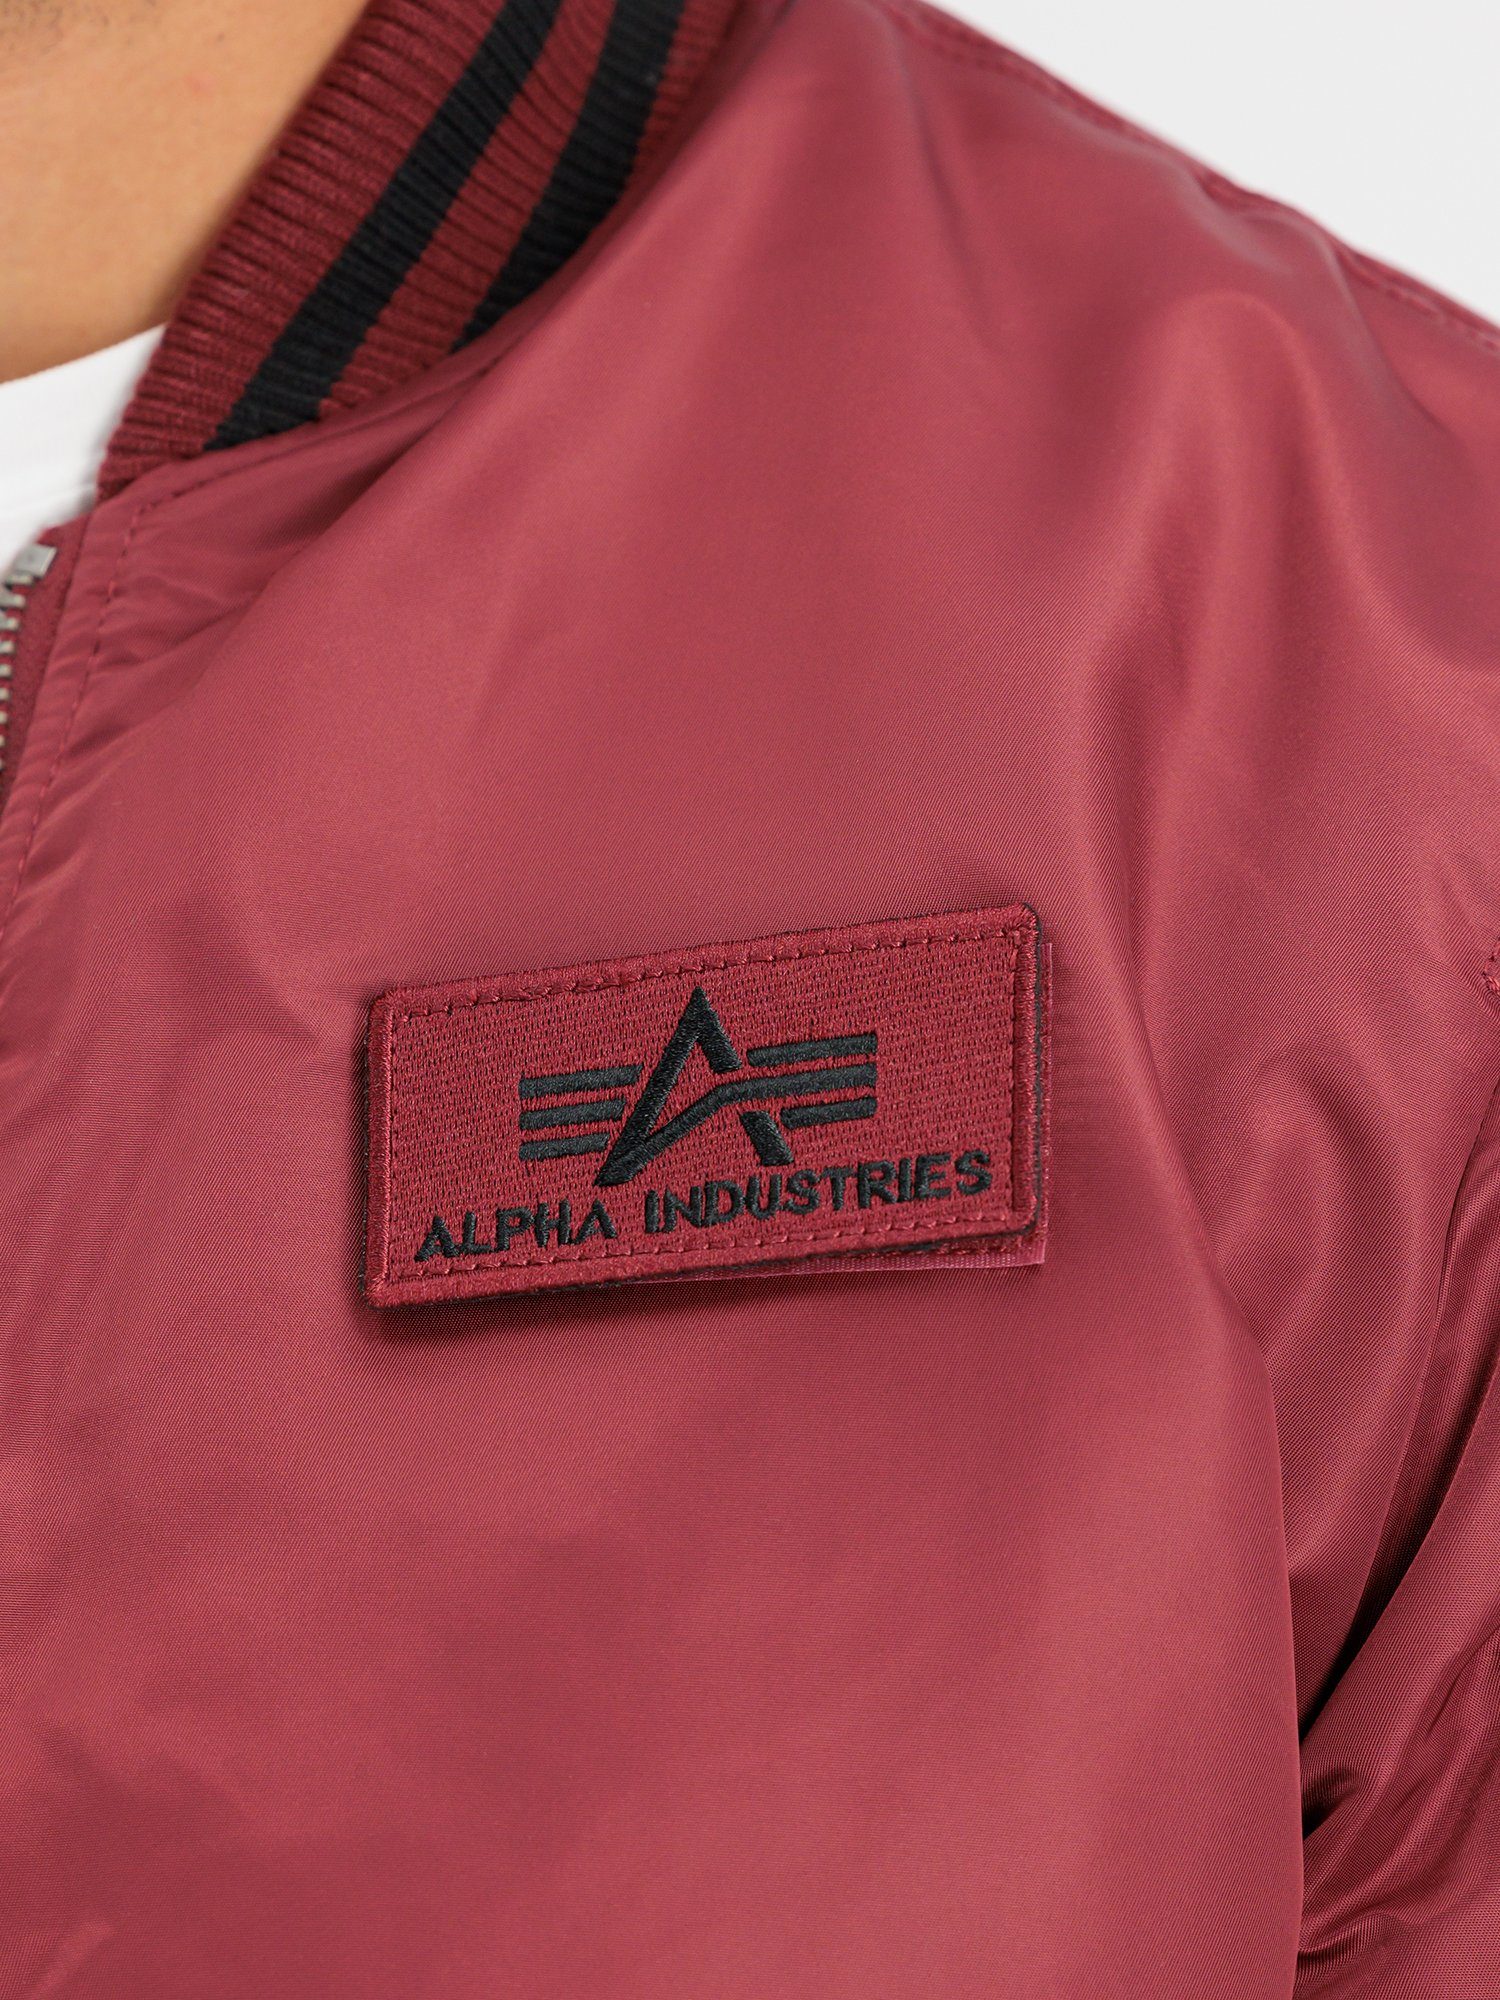 & Collegejacke Bomber Alpha Alpha Jackets Industries - Industries Flight Men